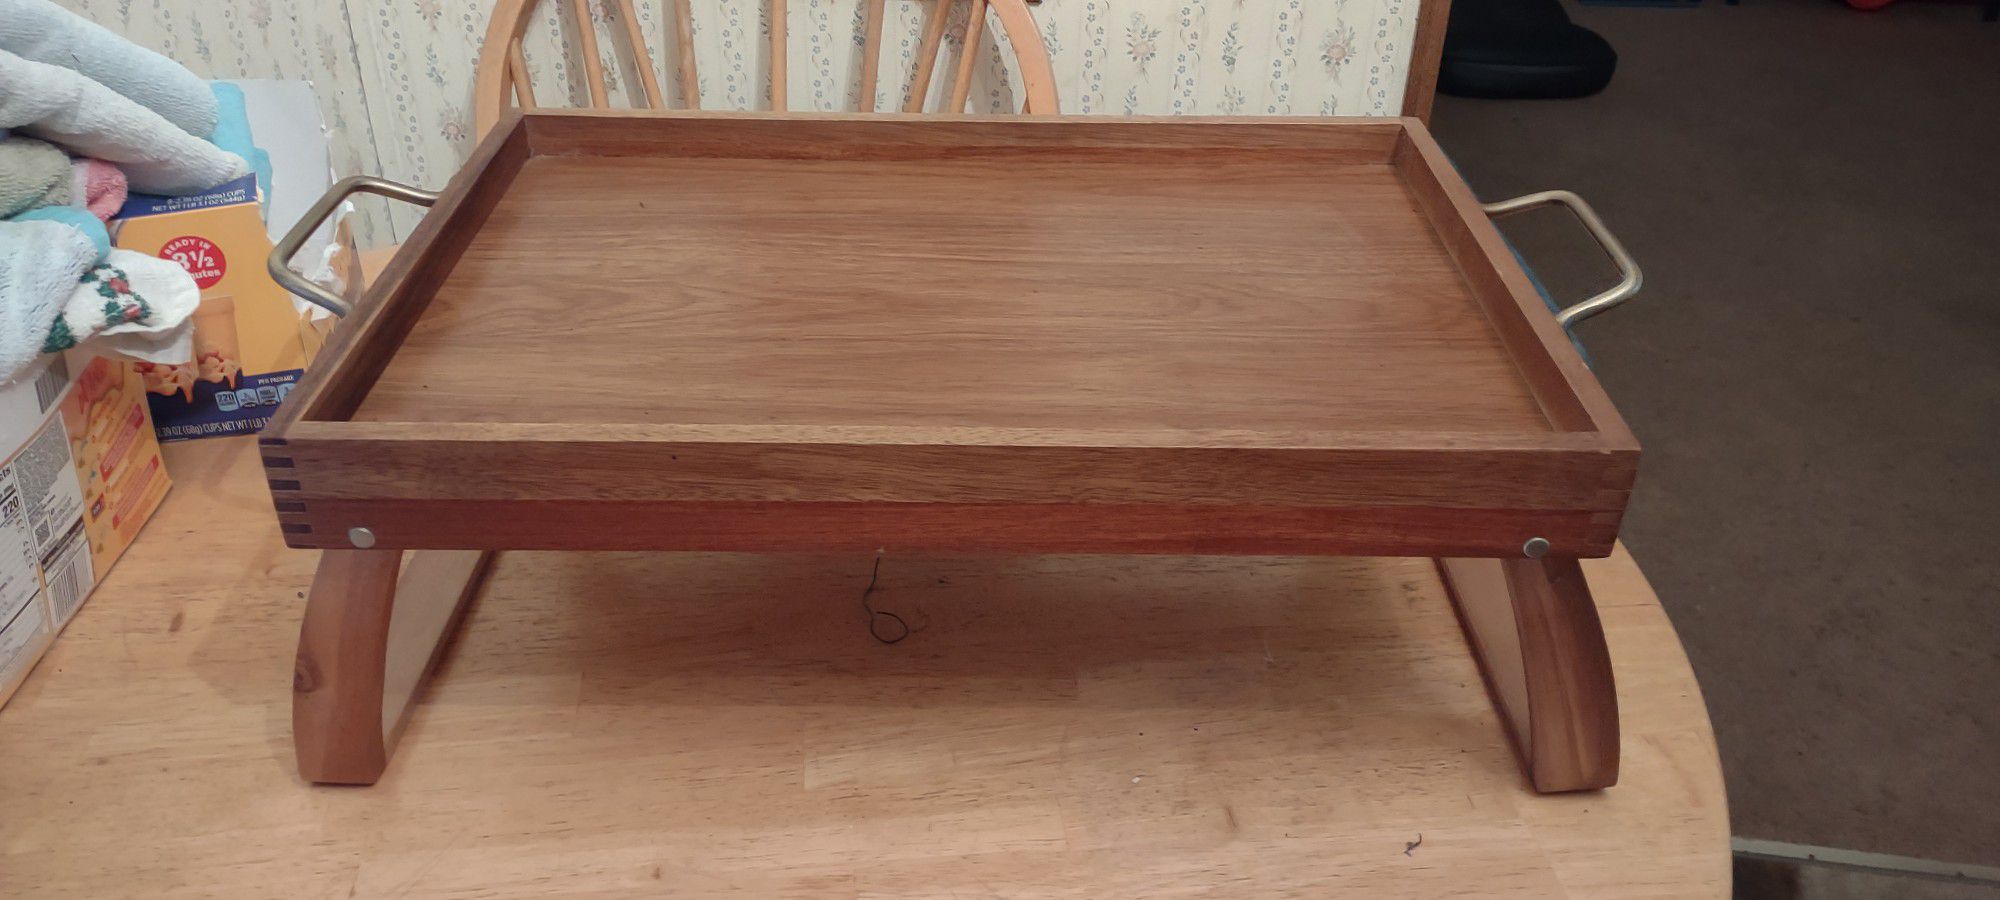 Acacia Bed Tray 23x15x8in - Threshold™

